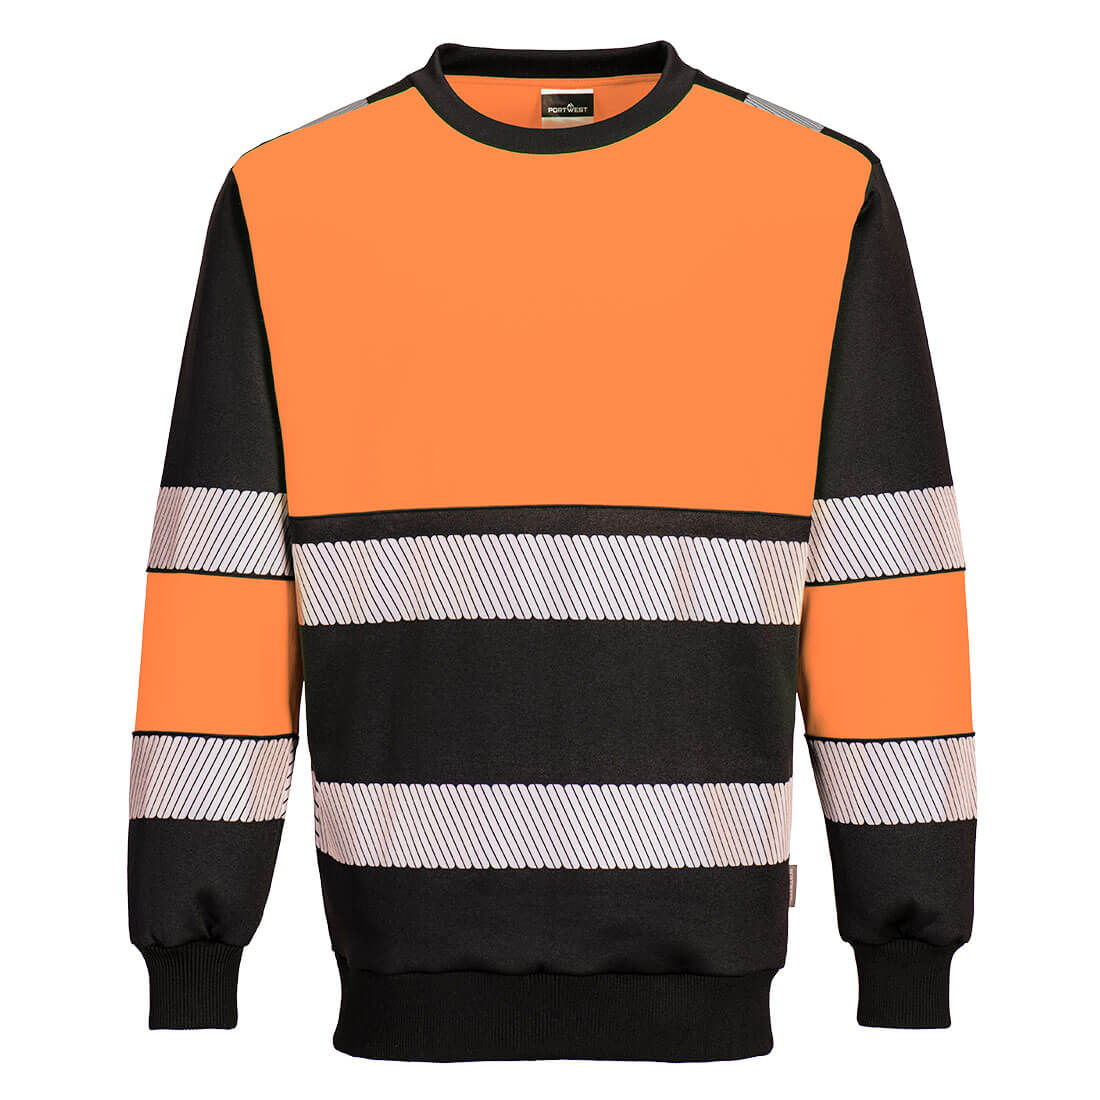 Portwest PW376 Hi-Vis Class 1 Sweatshirt Orange Black